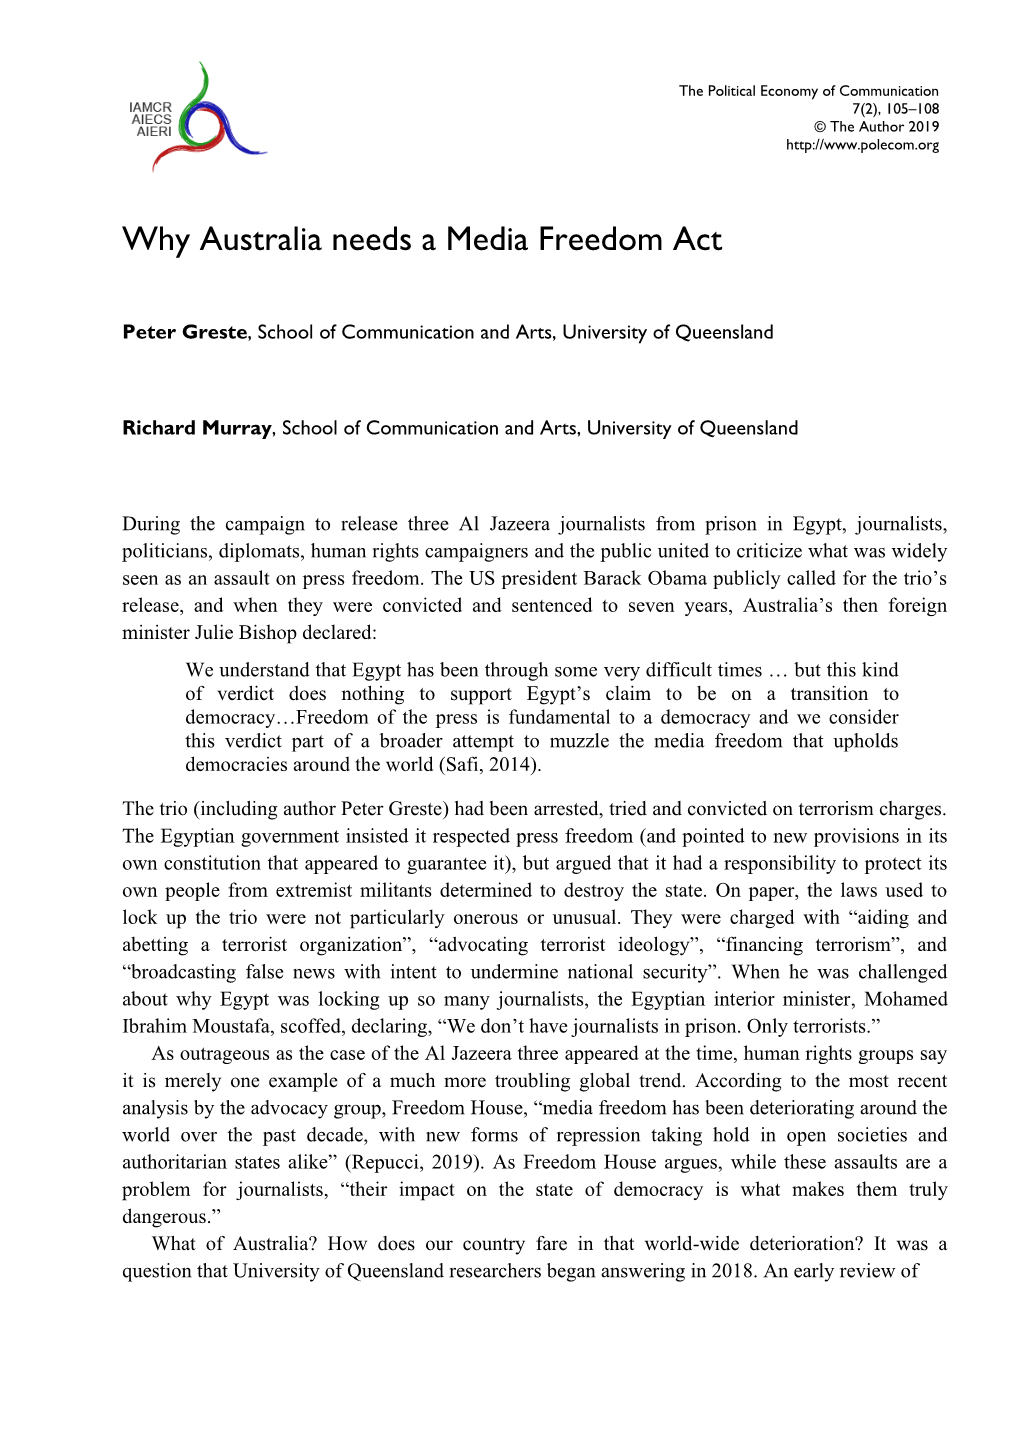 Why Australia Needs a Media Freedom Act